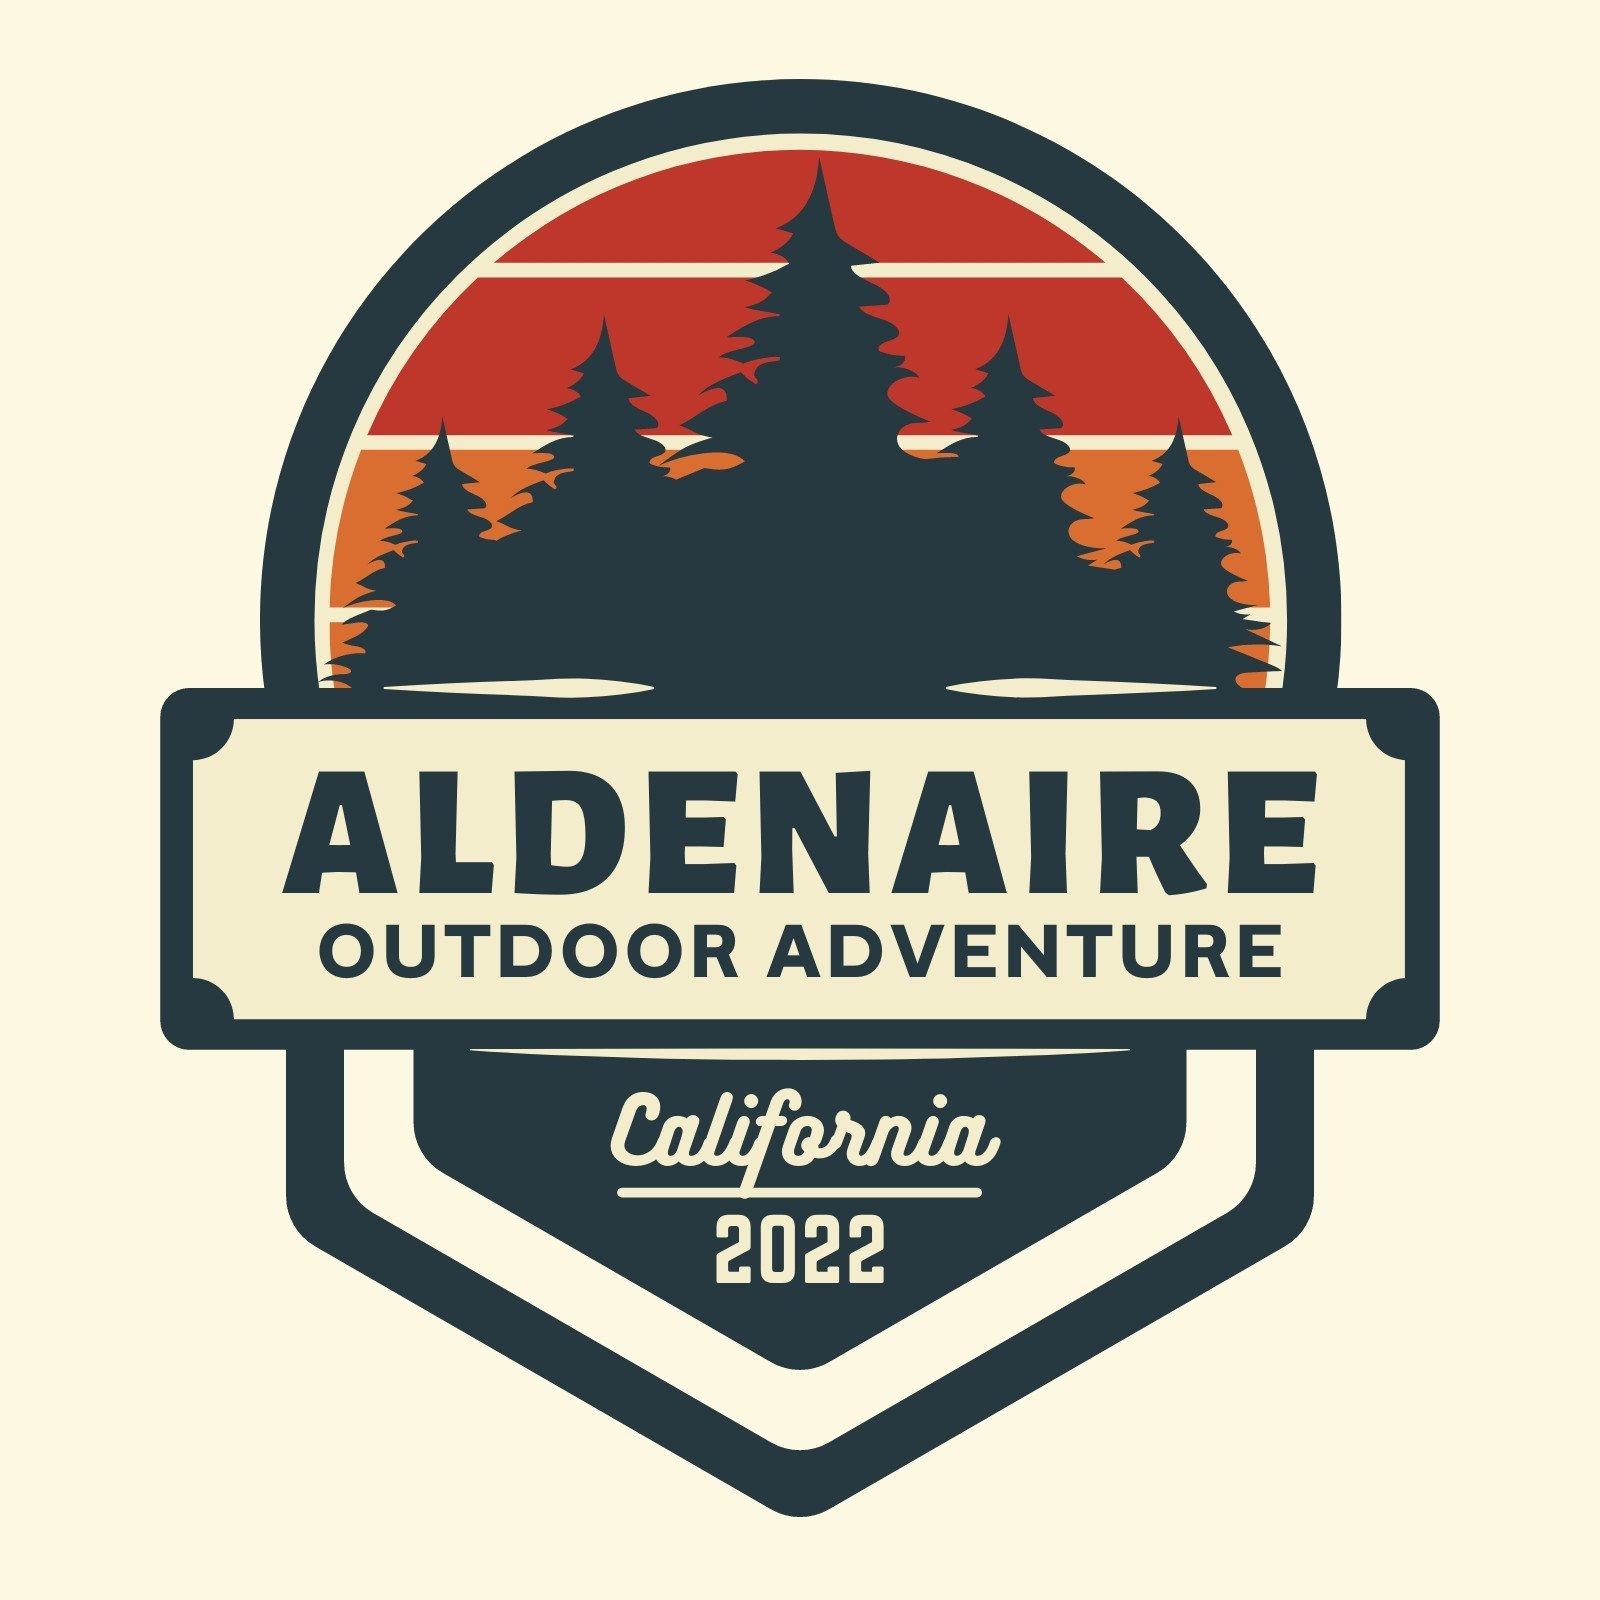 https://marketplace.canva.com/EAFZAp3ZReY/1/0/1600w/canva-vintage-retro-outdoor-adventure-badge-logo-LUt8Yxt7D2U.jpg